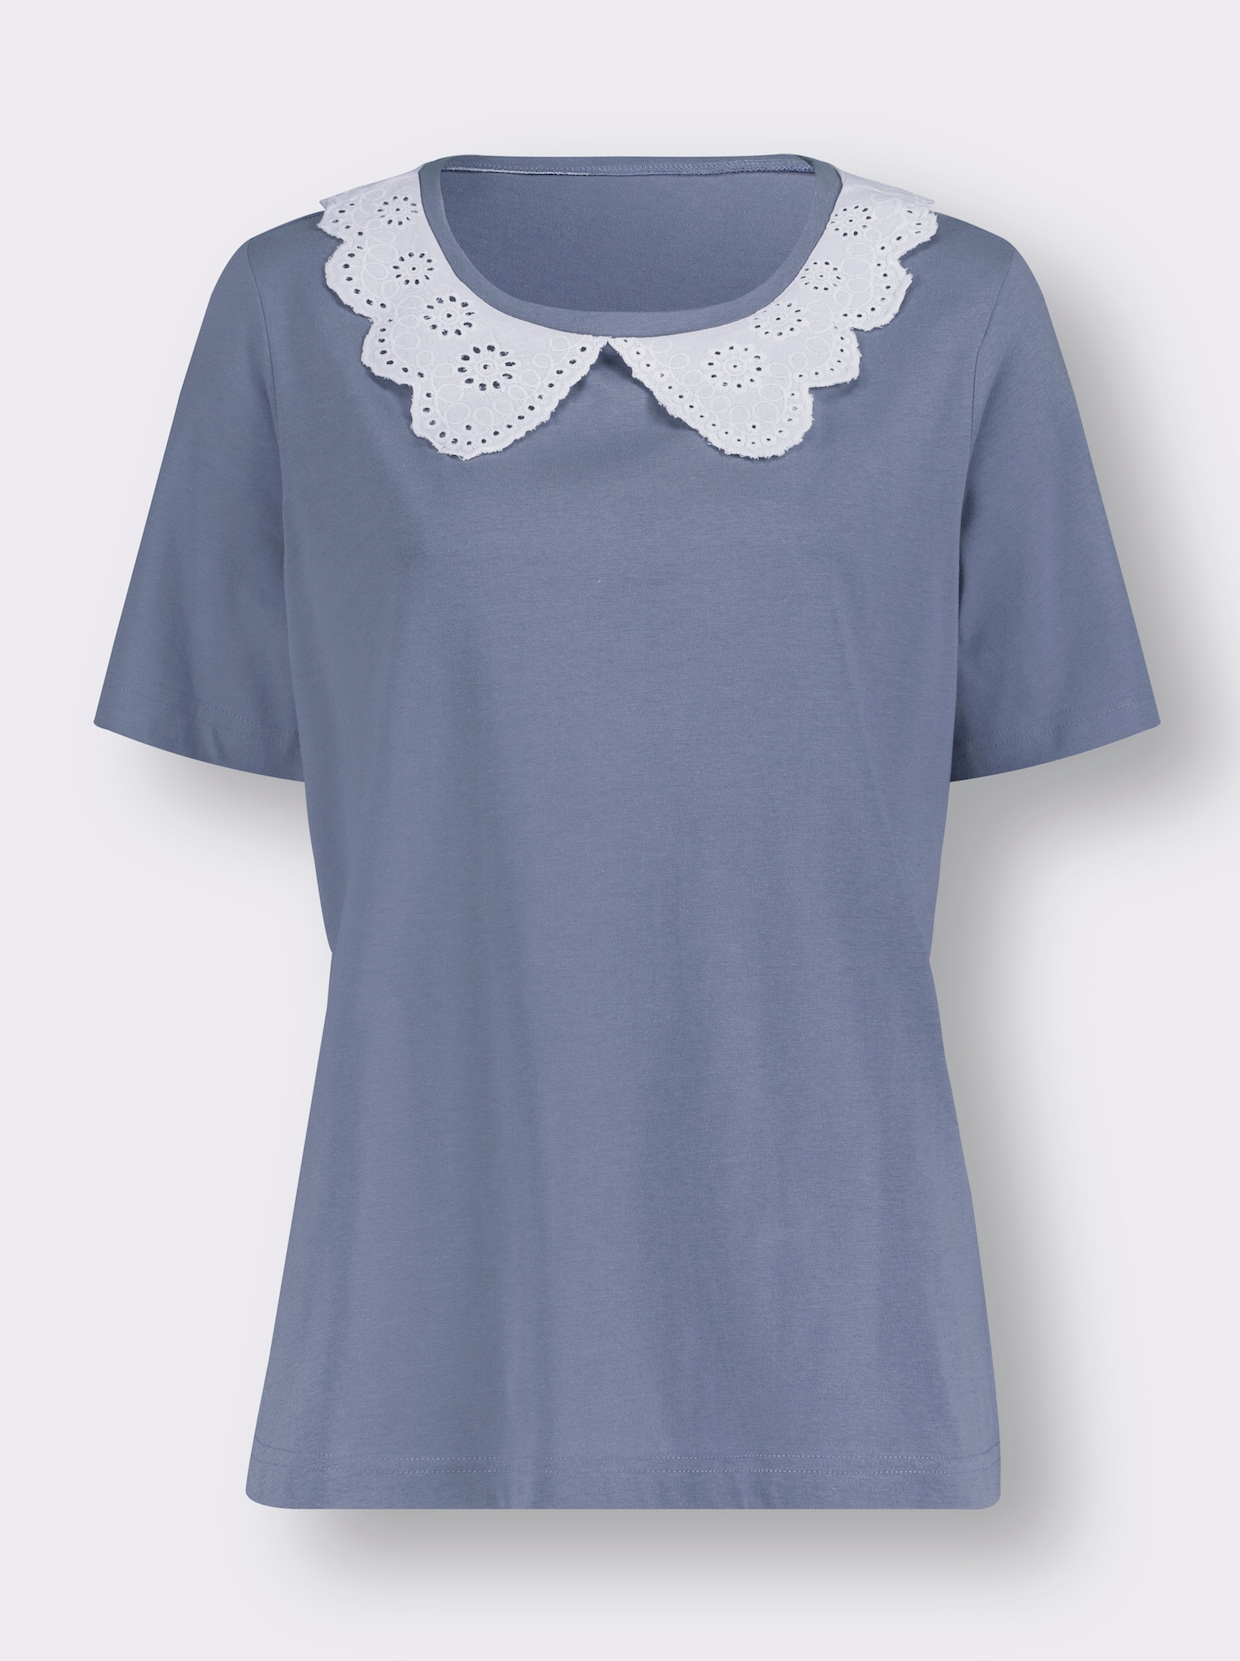 Tričko s krátkým rukávem - holubí modrá